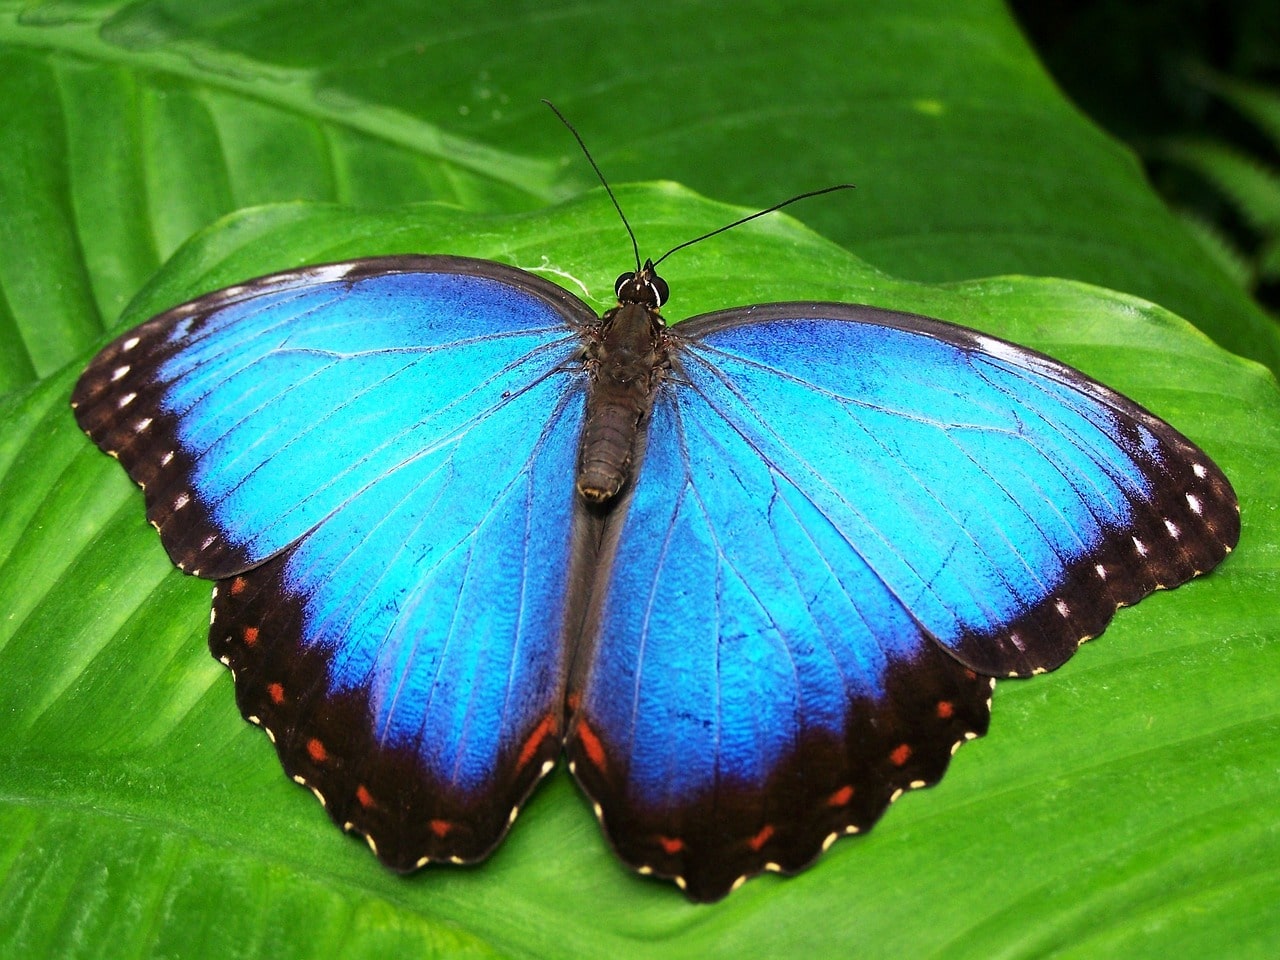 Blue butterfly on green leaf.